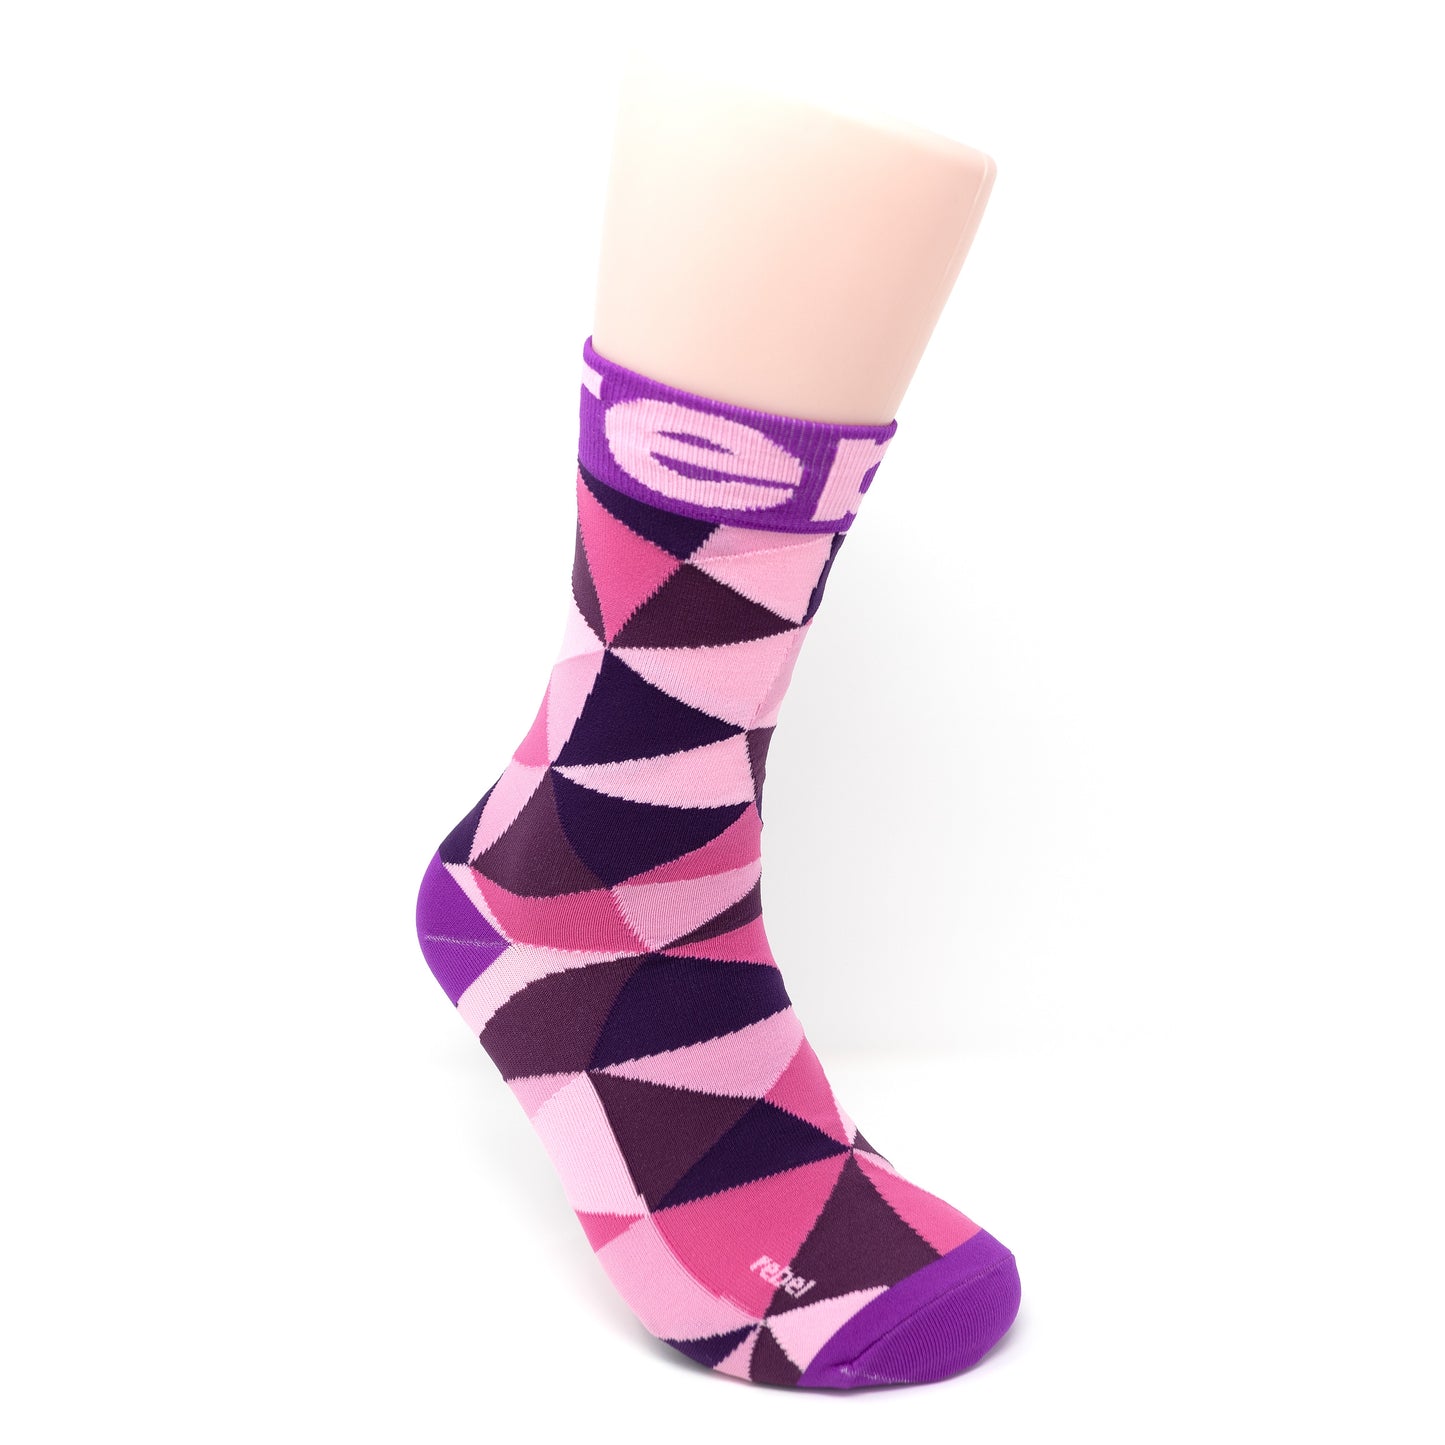 Rebel Fashion's Dress Purple Socks